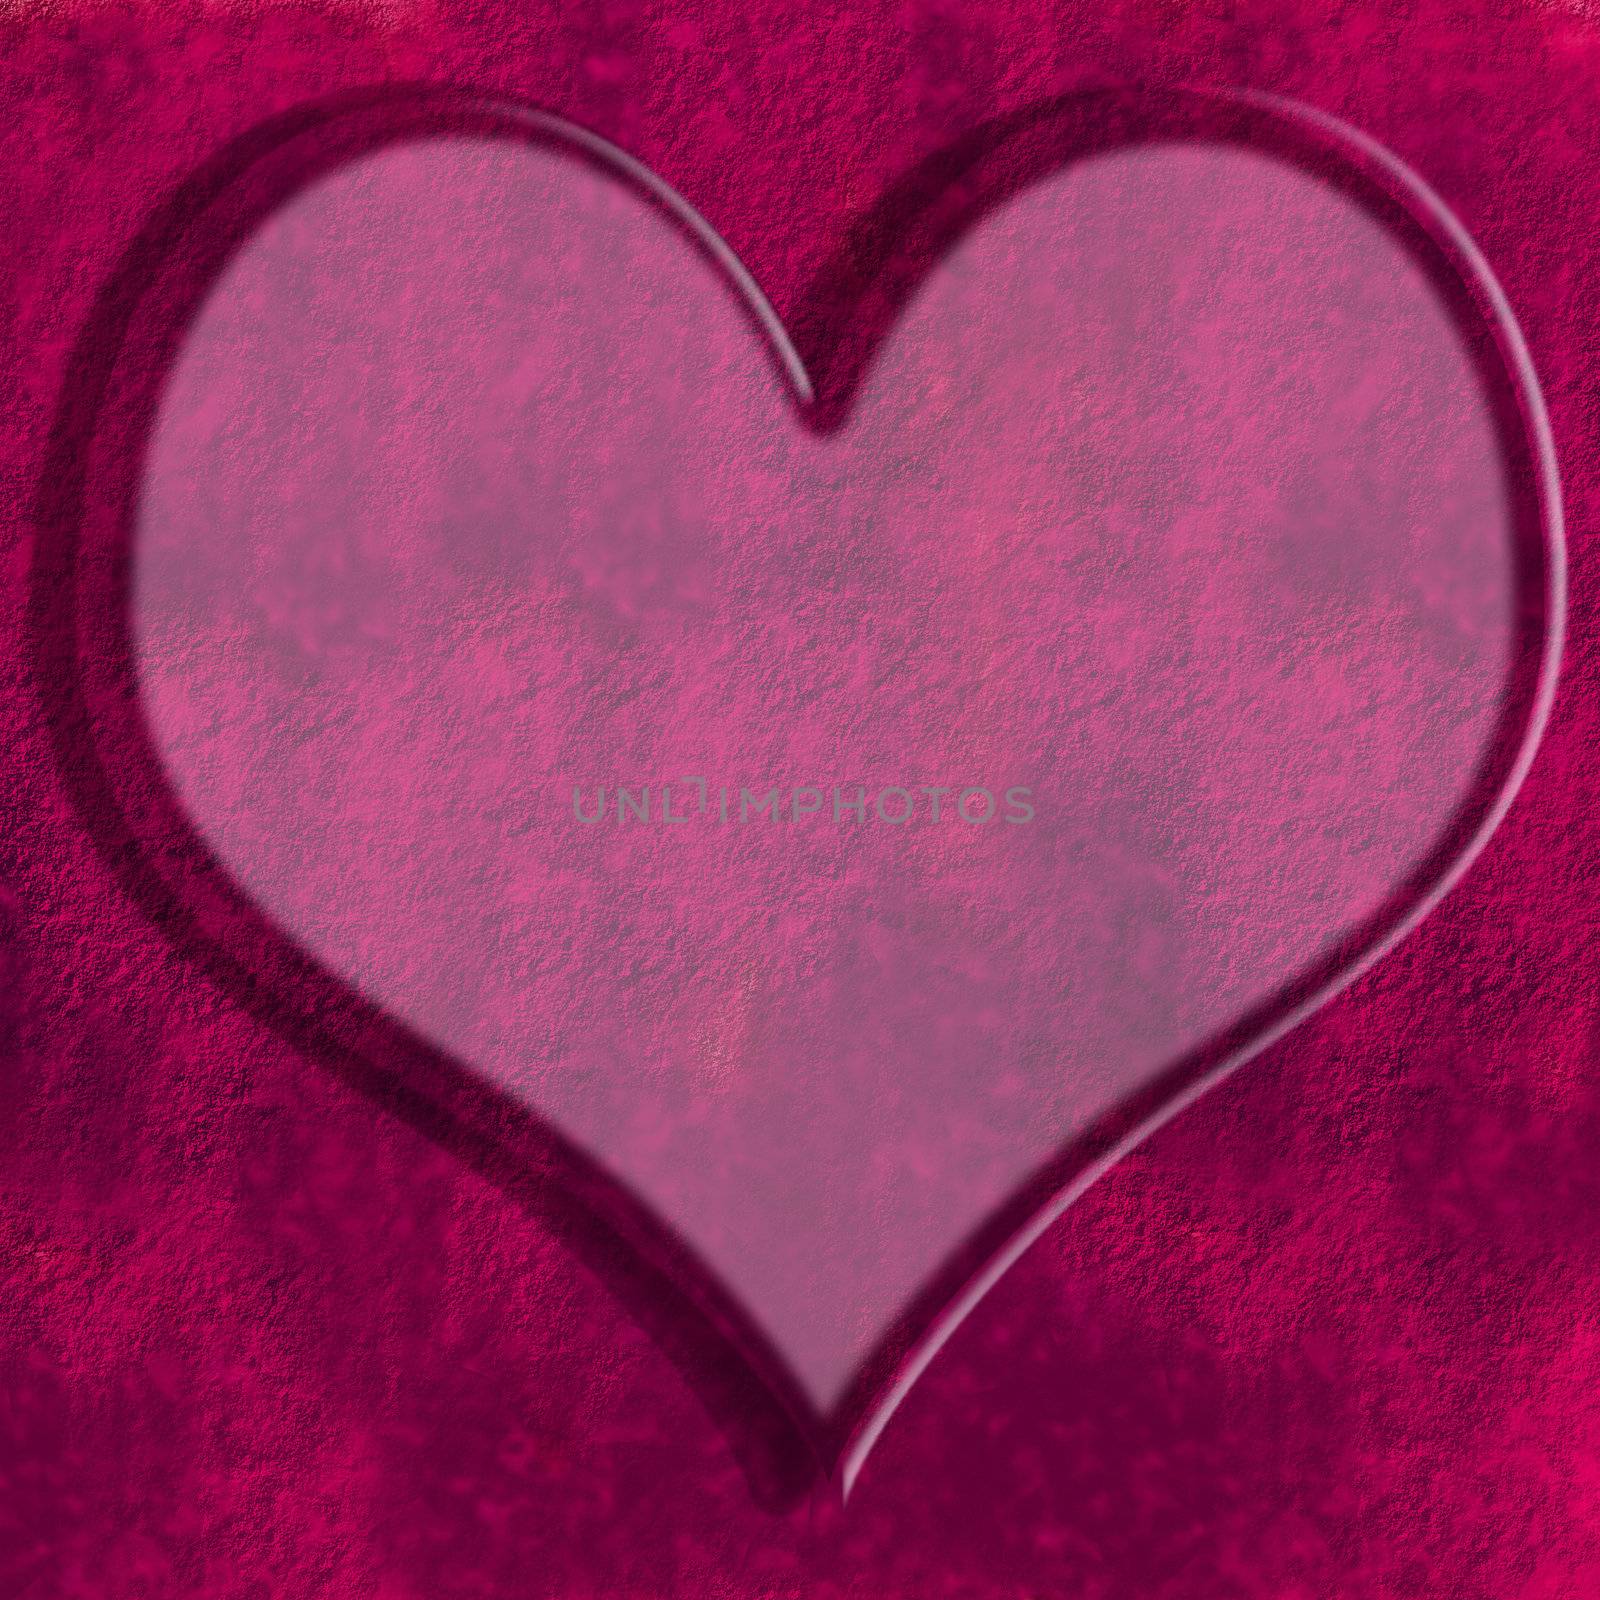 heart wallpaper in two shades garnets